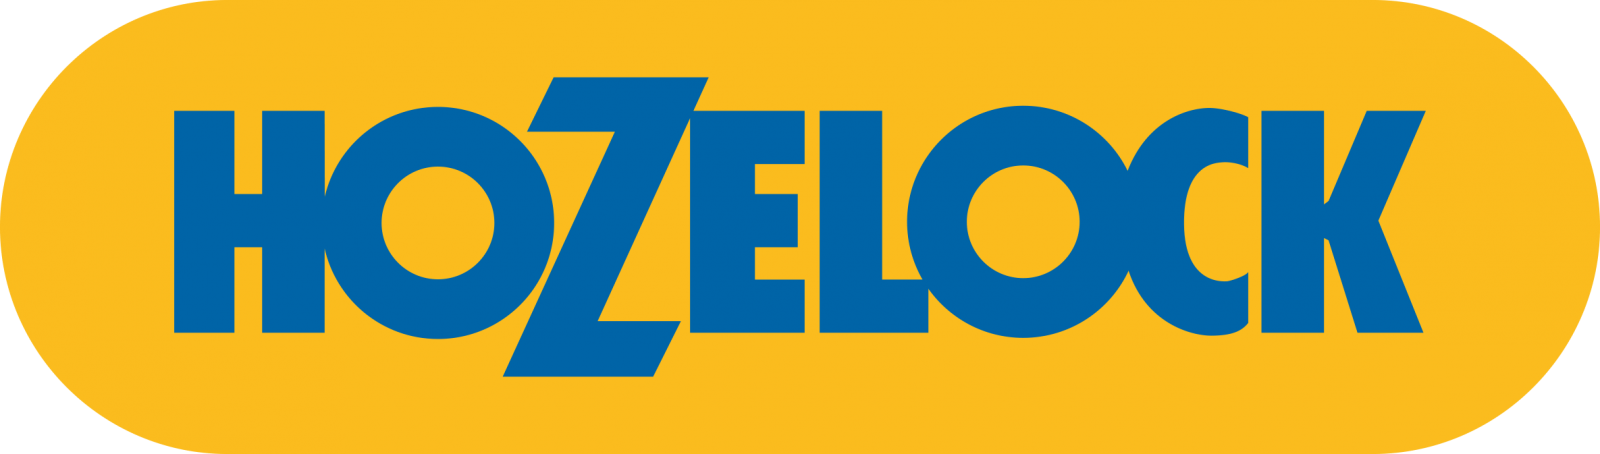 Hezelock logo